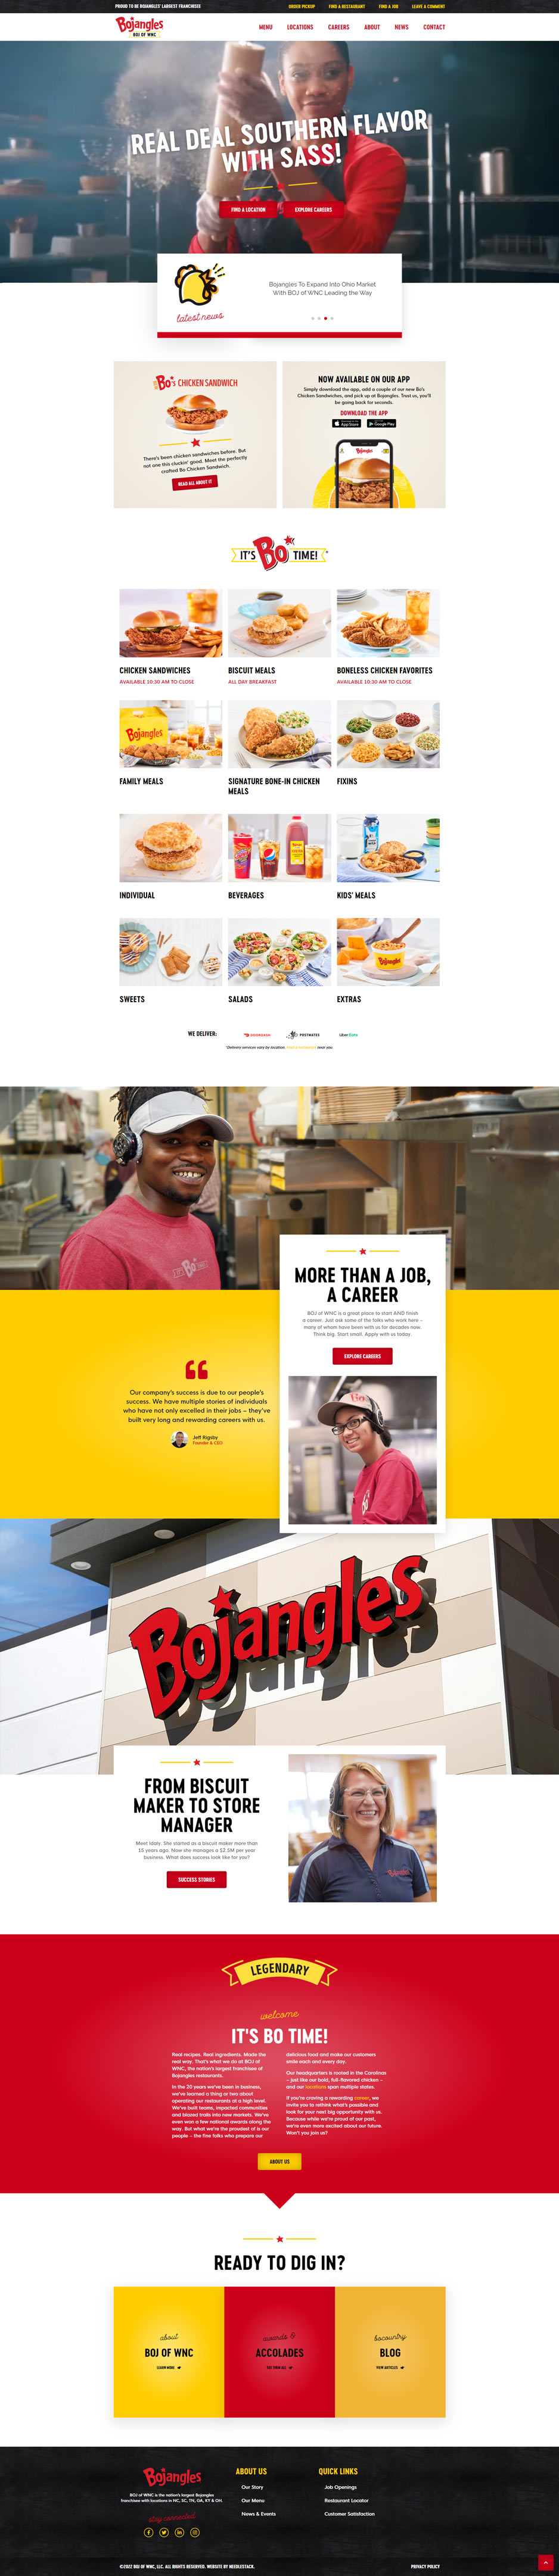 BoCountry Bojangles Website design